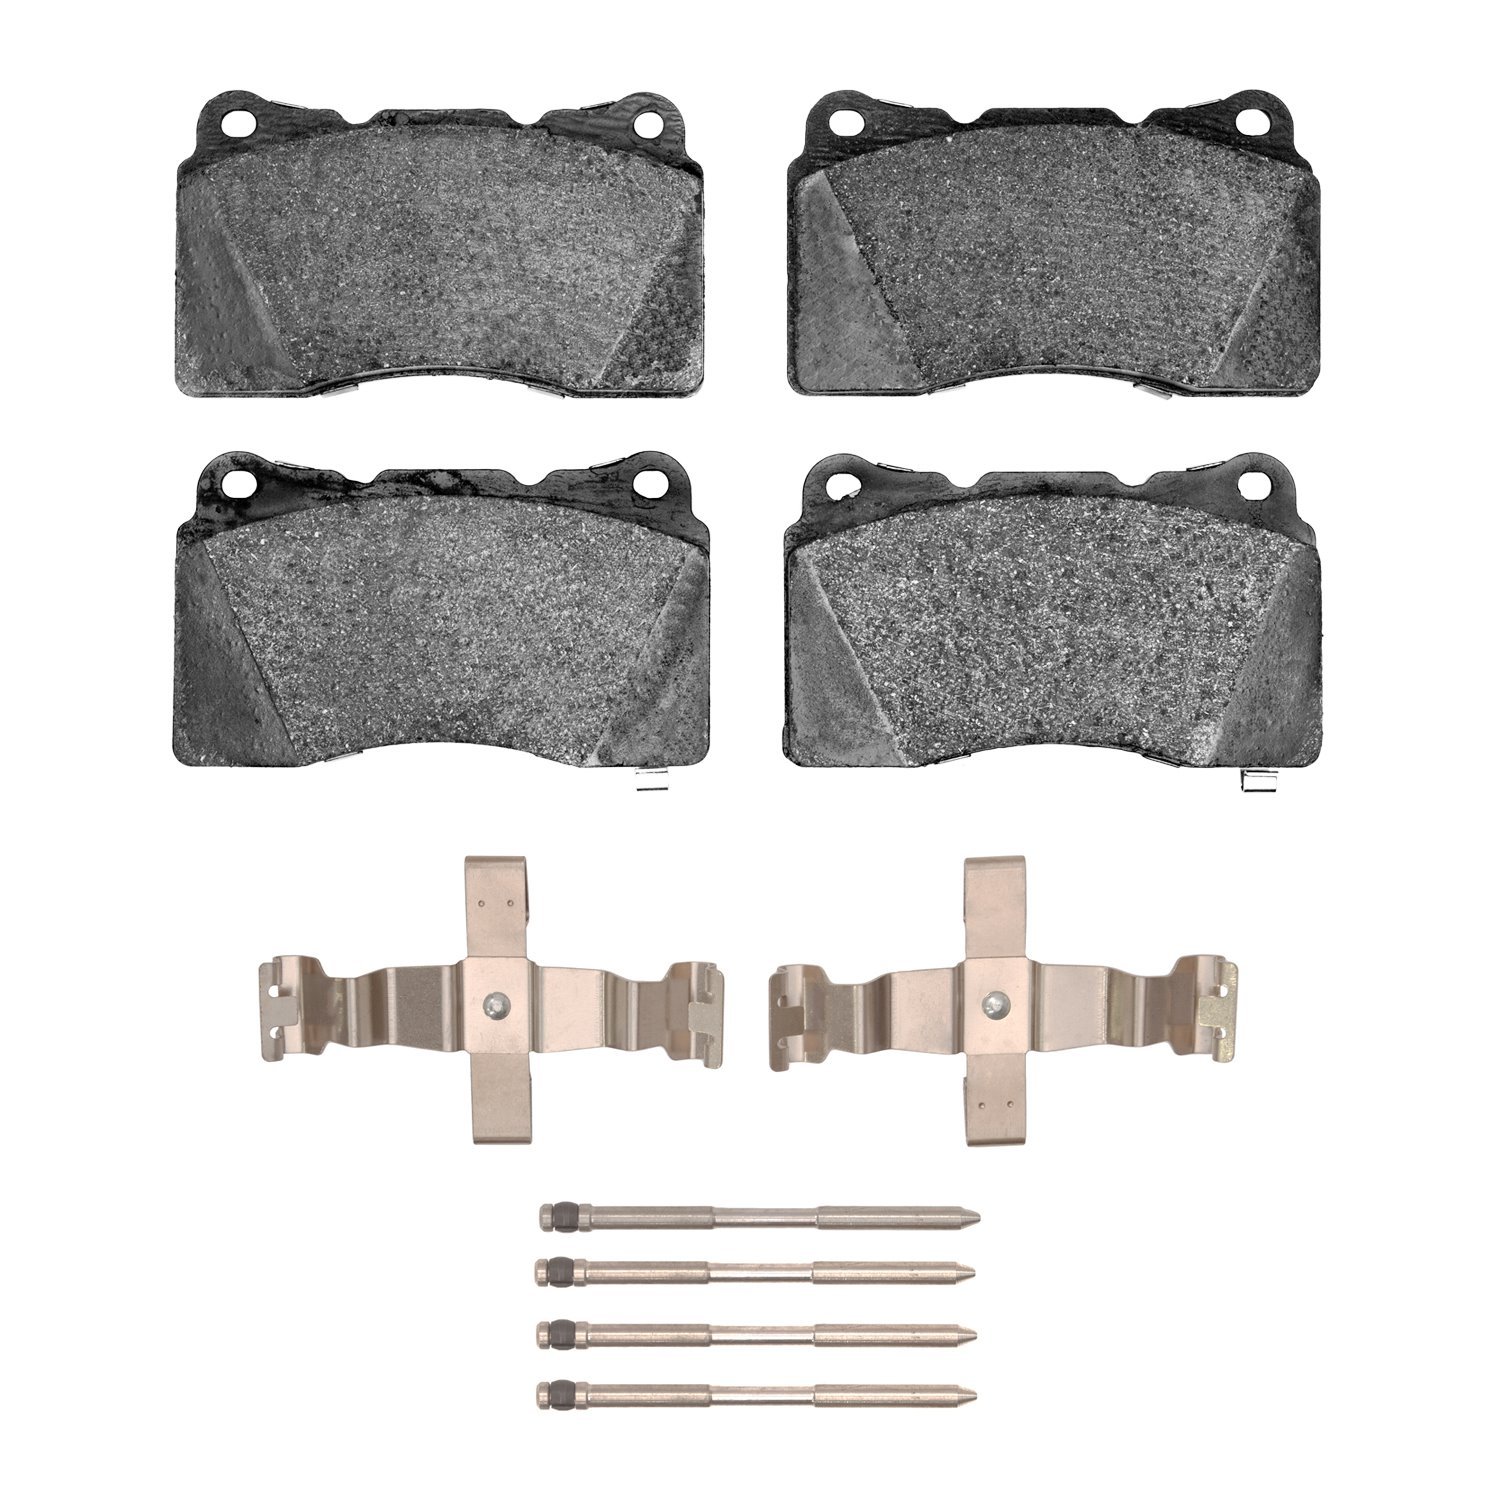 1551-1001-06 5000 Advanced Low-Metallic Brake Pads & Hardware Kit, 2017-2019 Acura/Honda, Position: Front